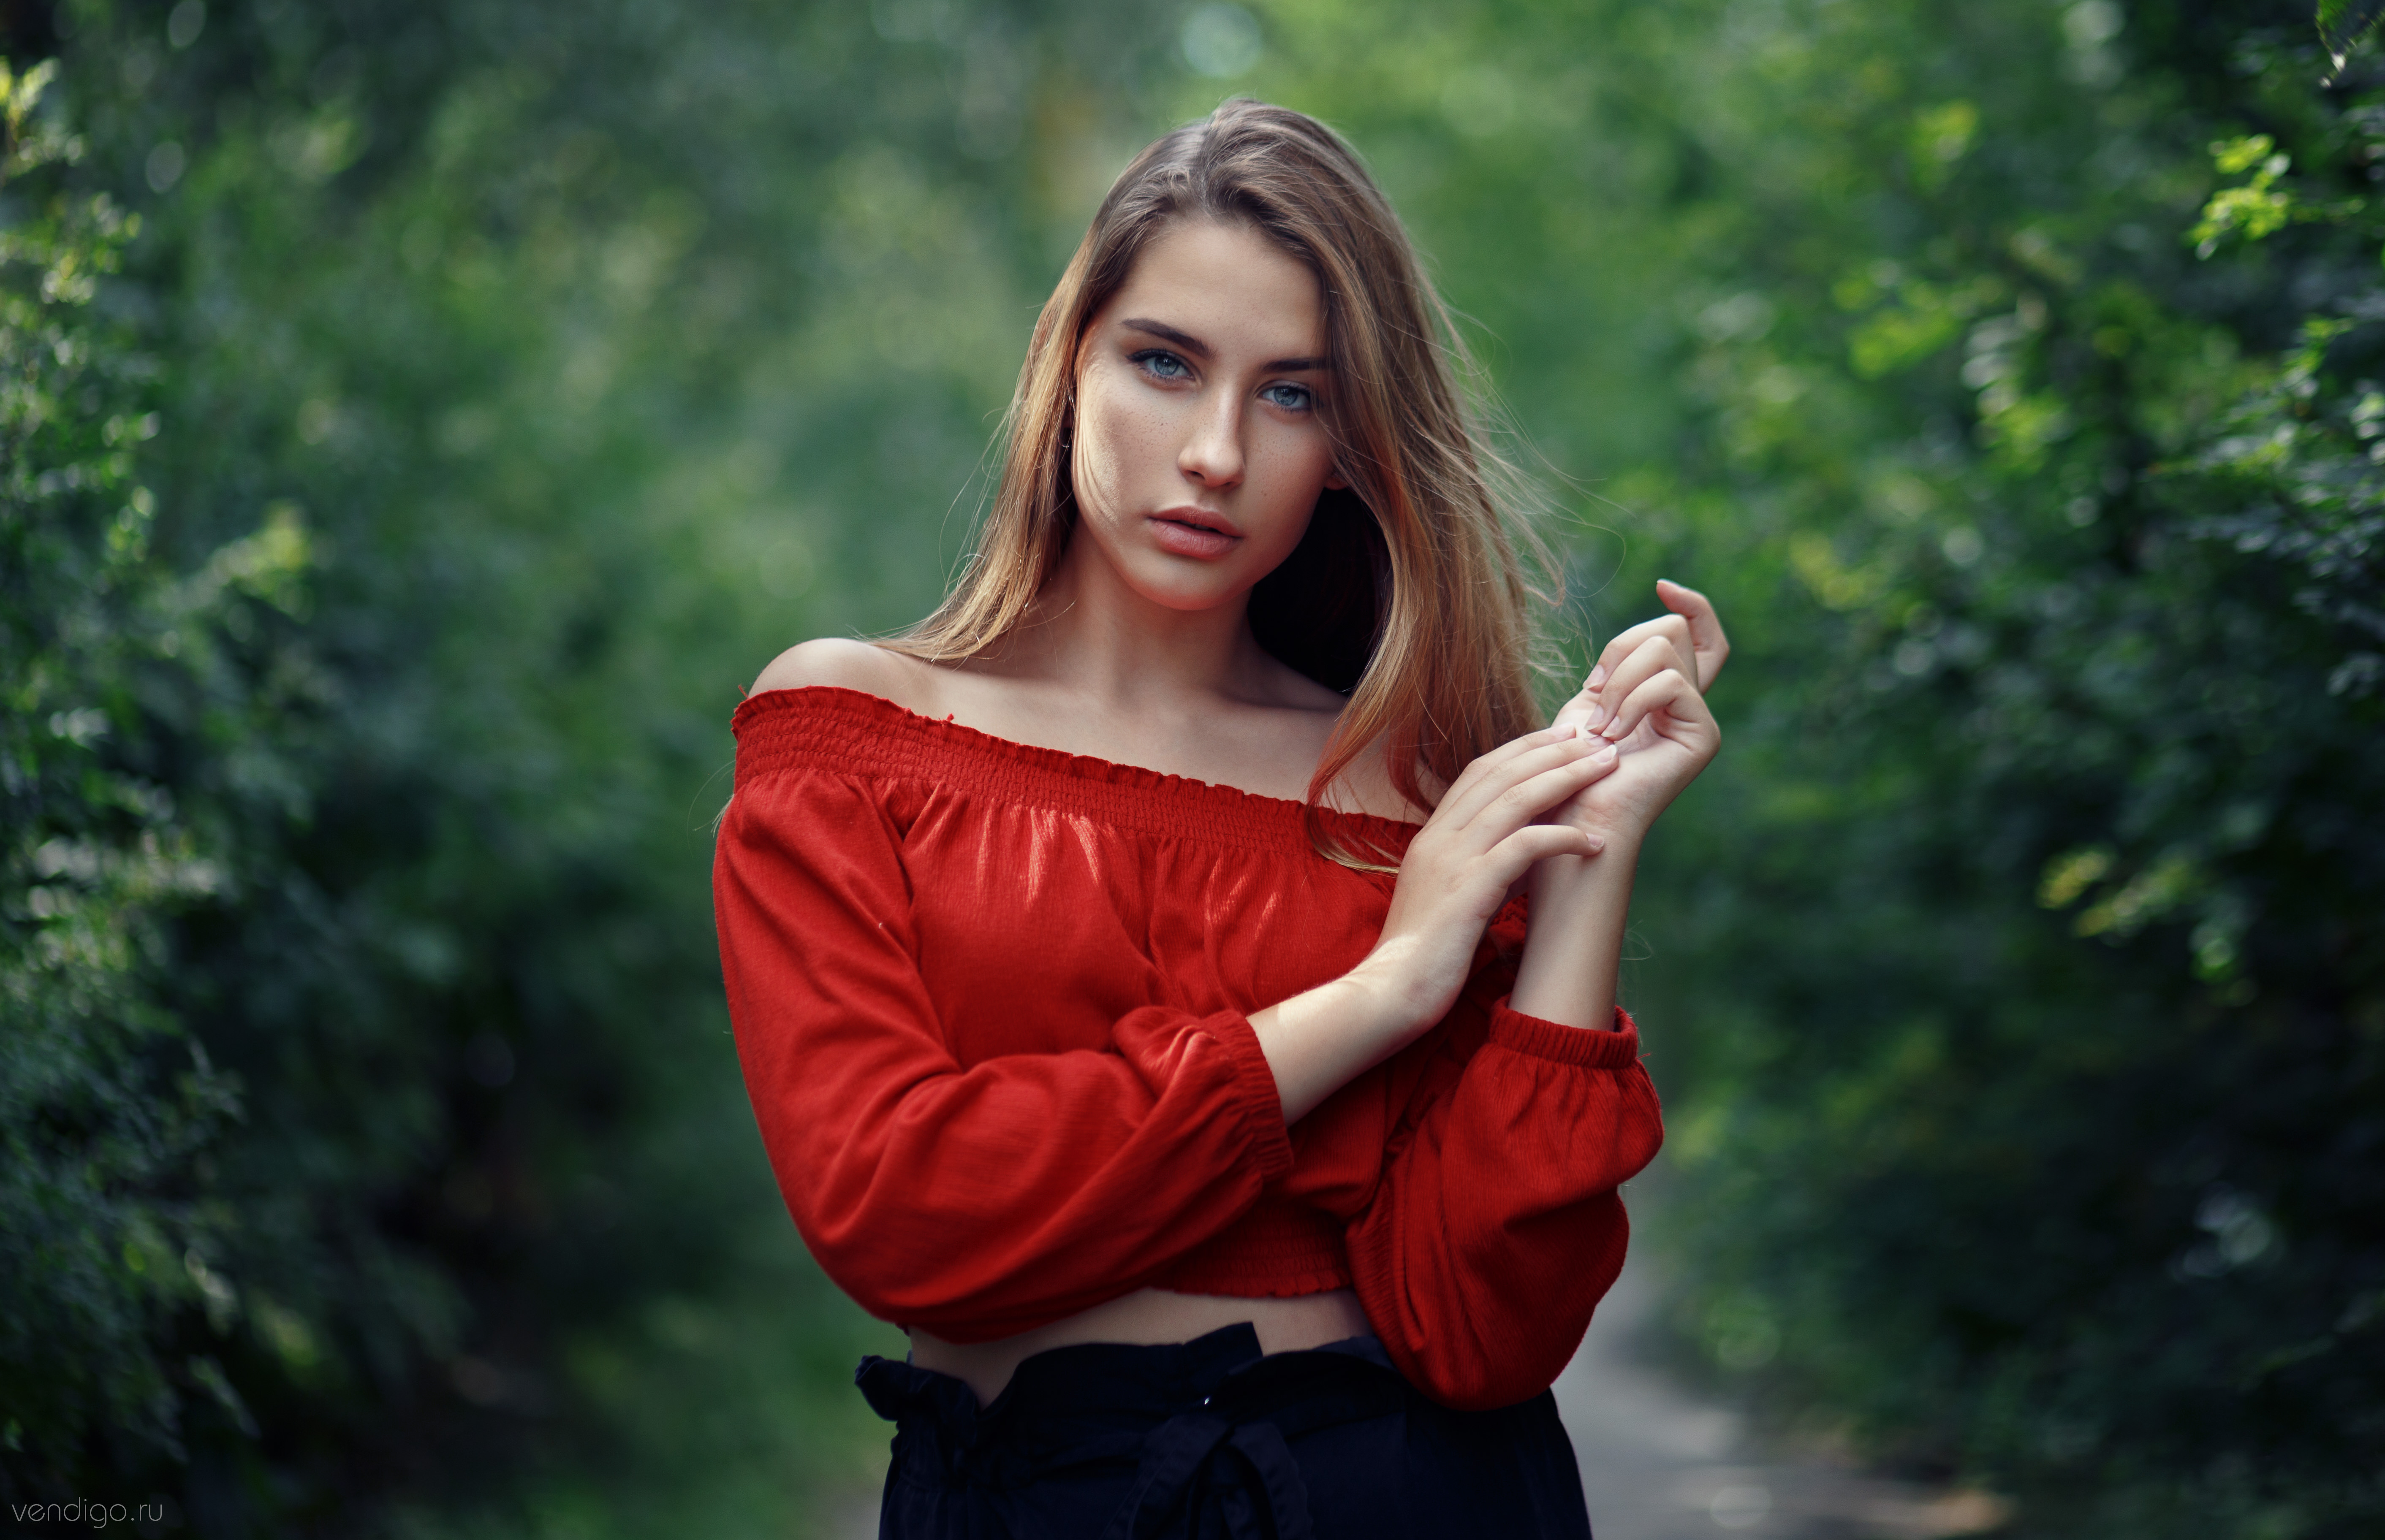 Women Blonde Bare Shoulders Portrait Freckles Evgeniy Bulatov Women Outdoors Red Tops Brunette Long  5648x3648